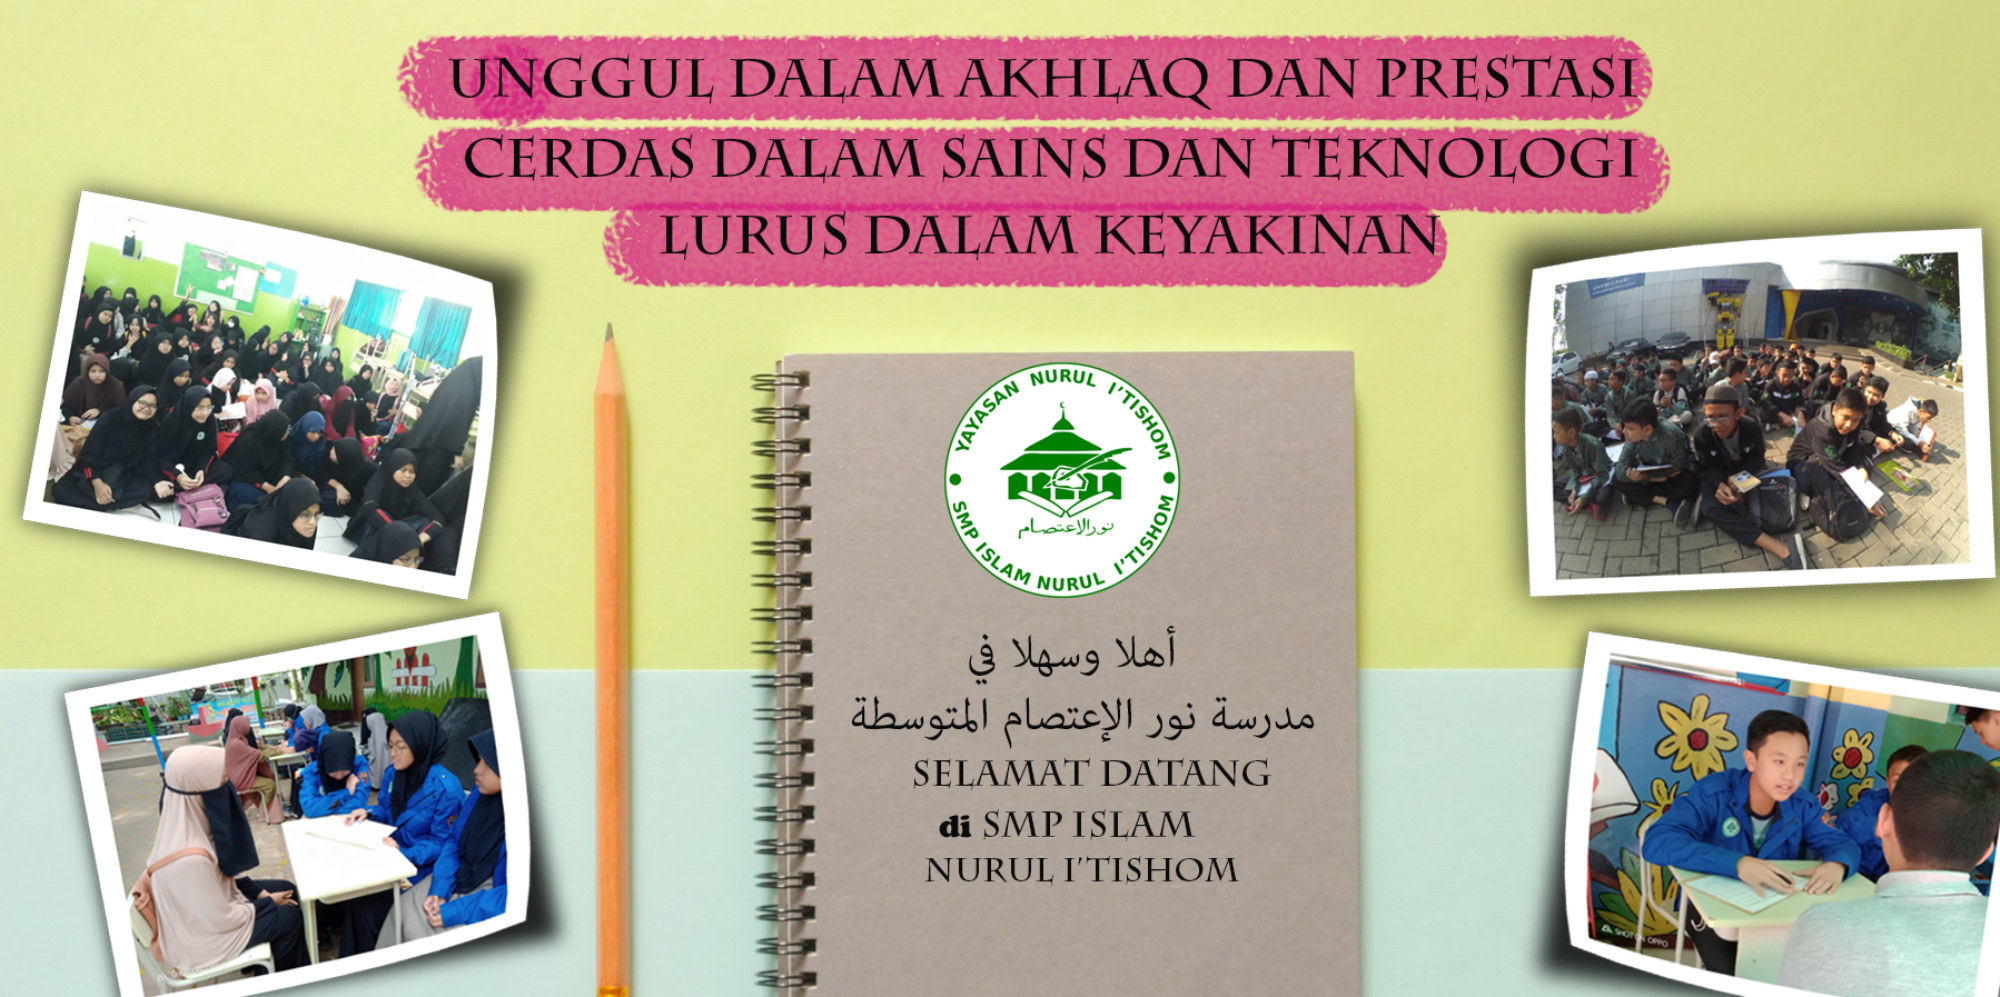 SMP Islam Nurul I'tishom